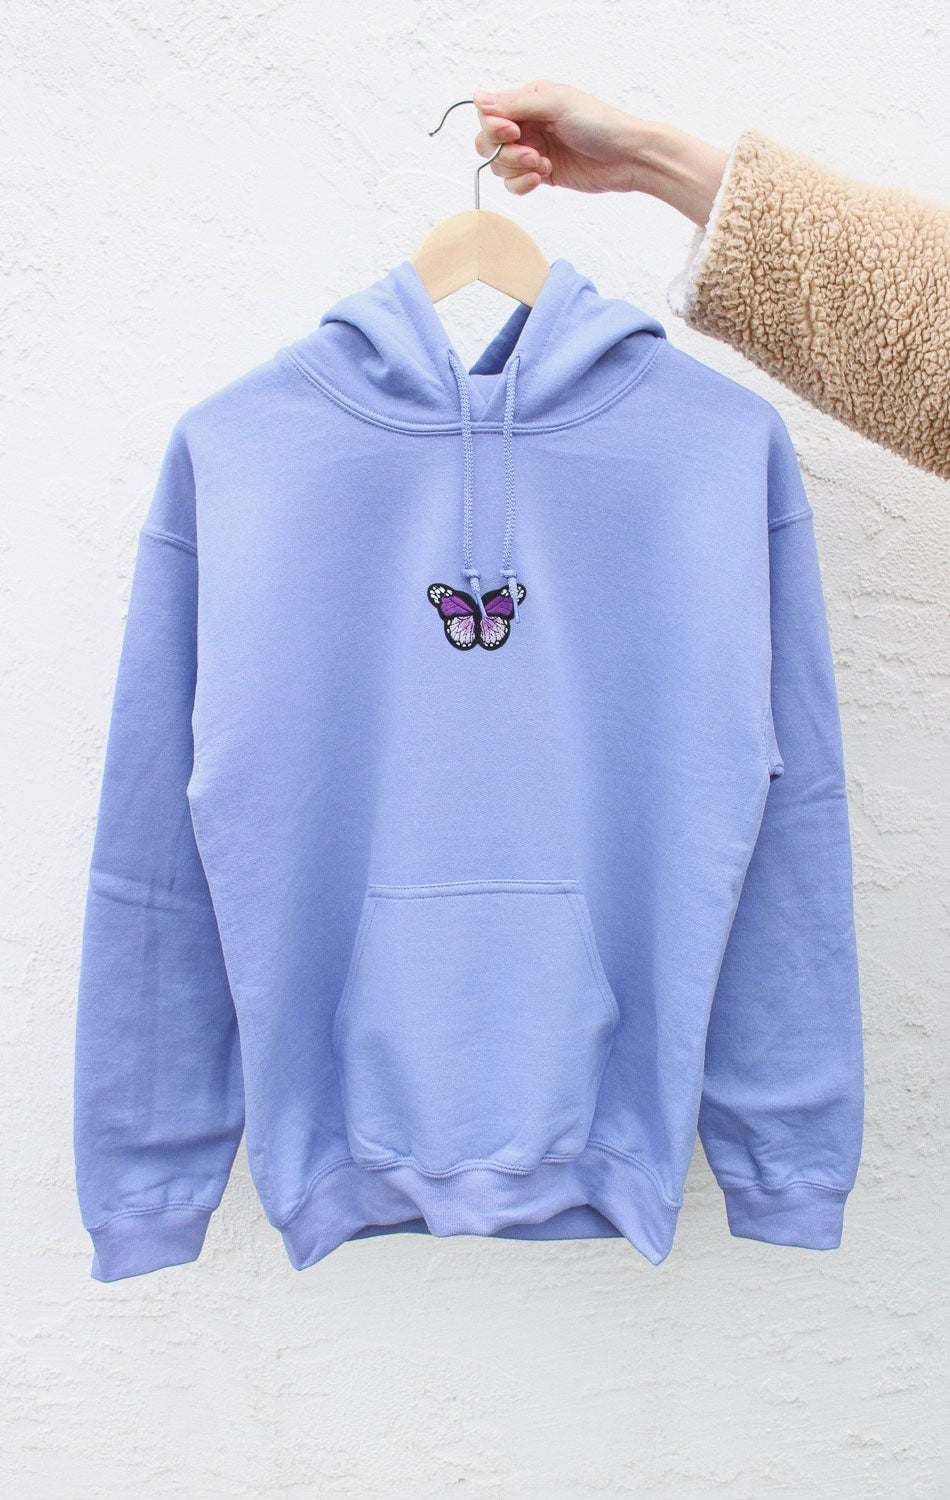 butterfly nike hoodie